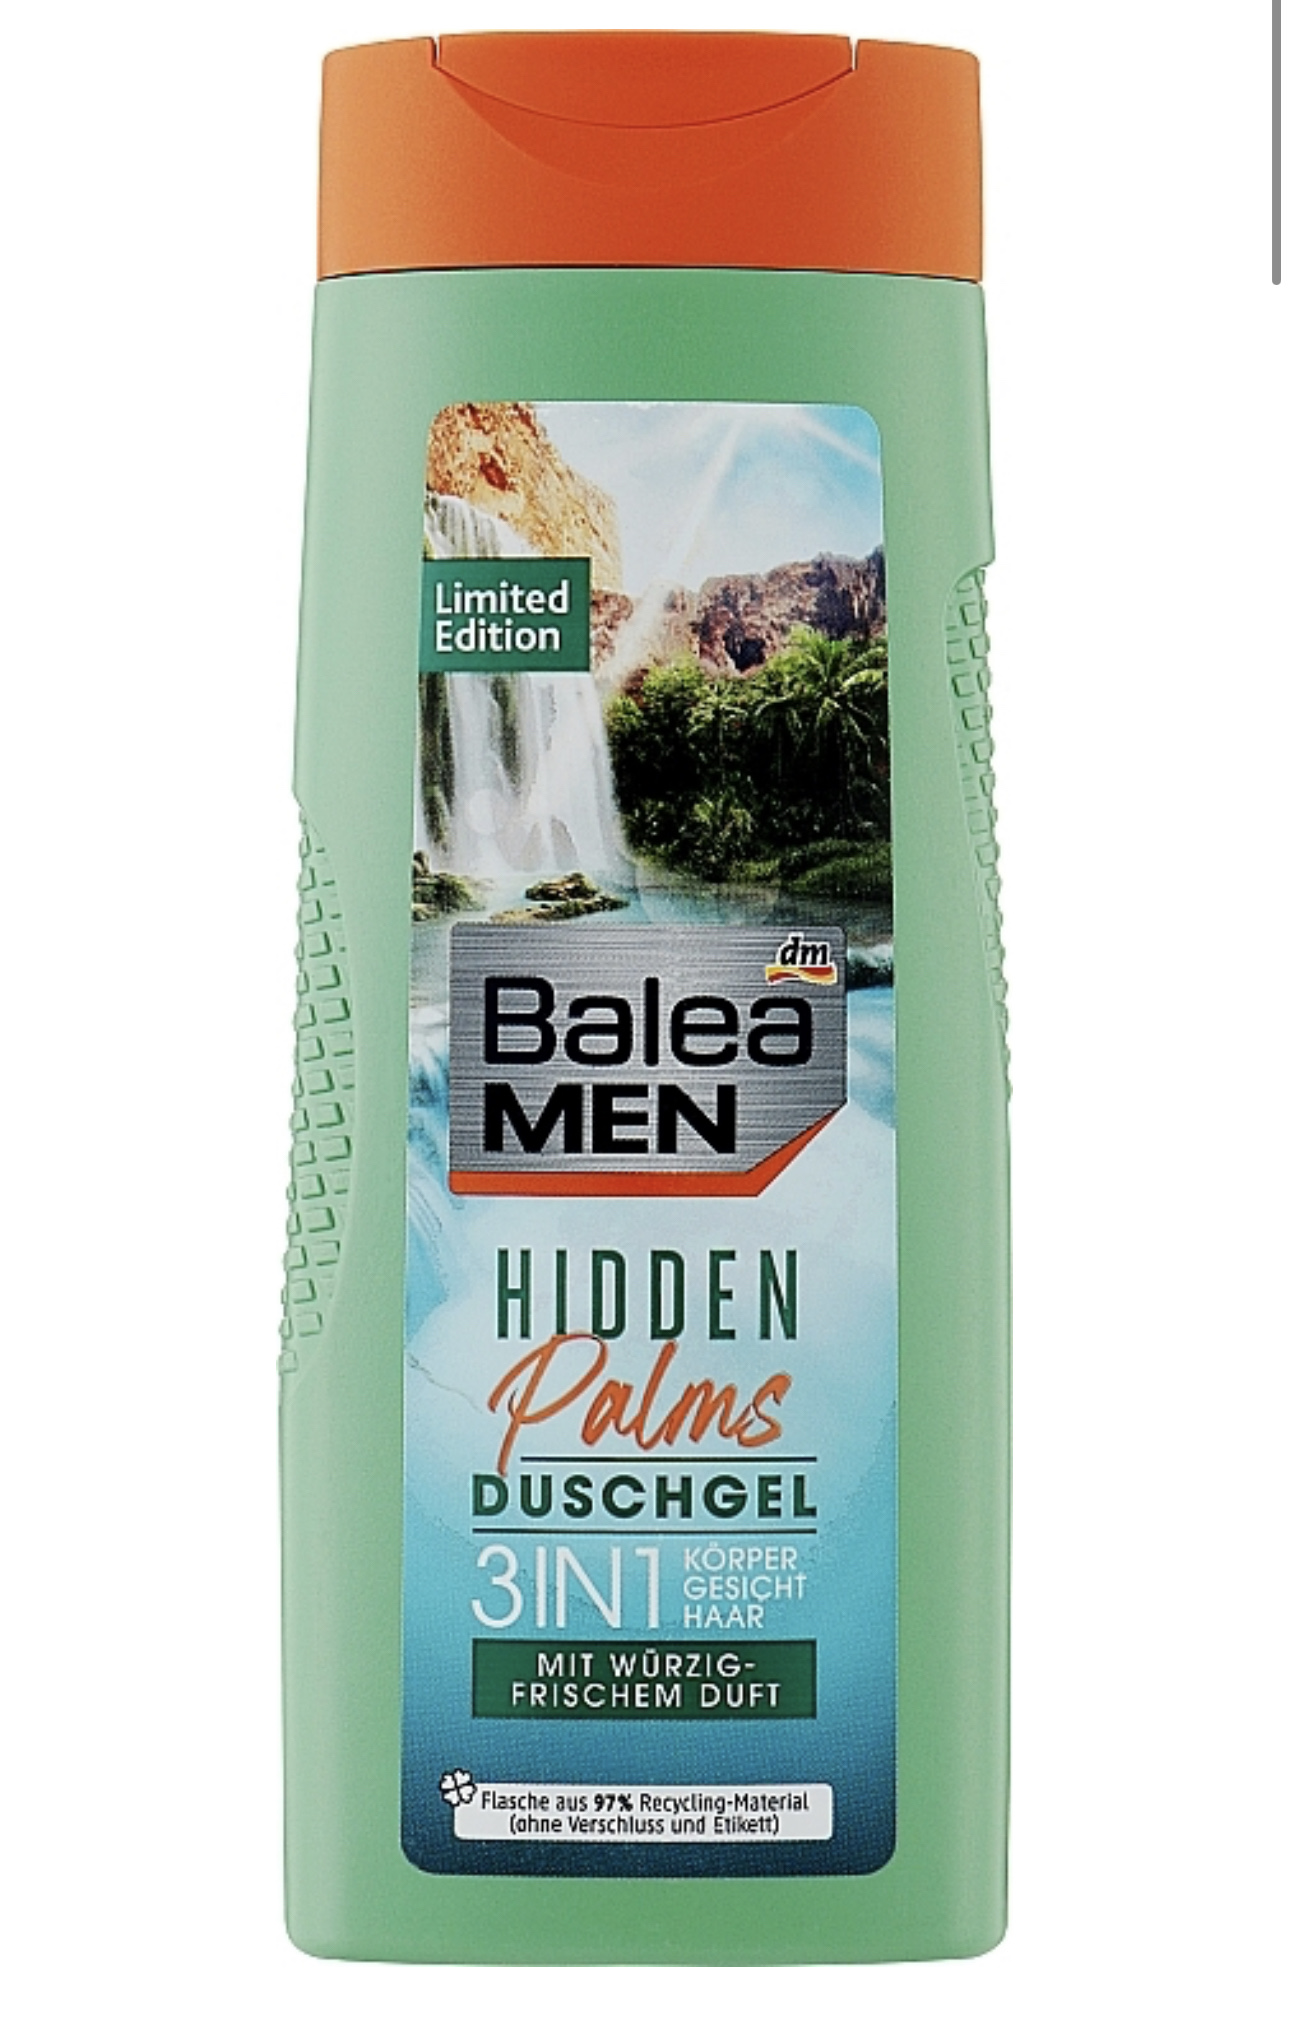 Balea Men Hidden Palms Duschgel 3 in 1 Vegan - Чоловічий гель для душу 3 в 1, 300 мл, Німеччина